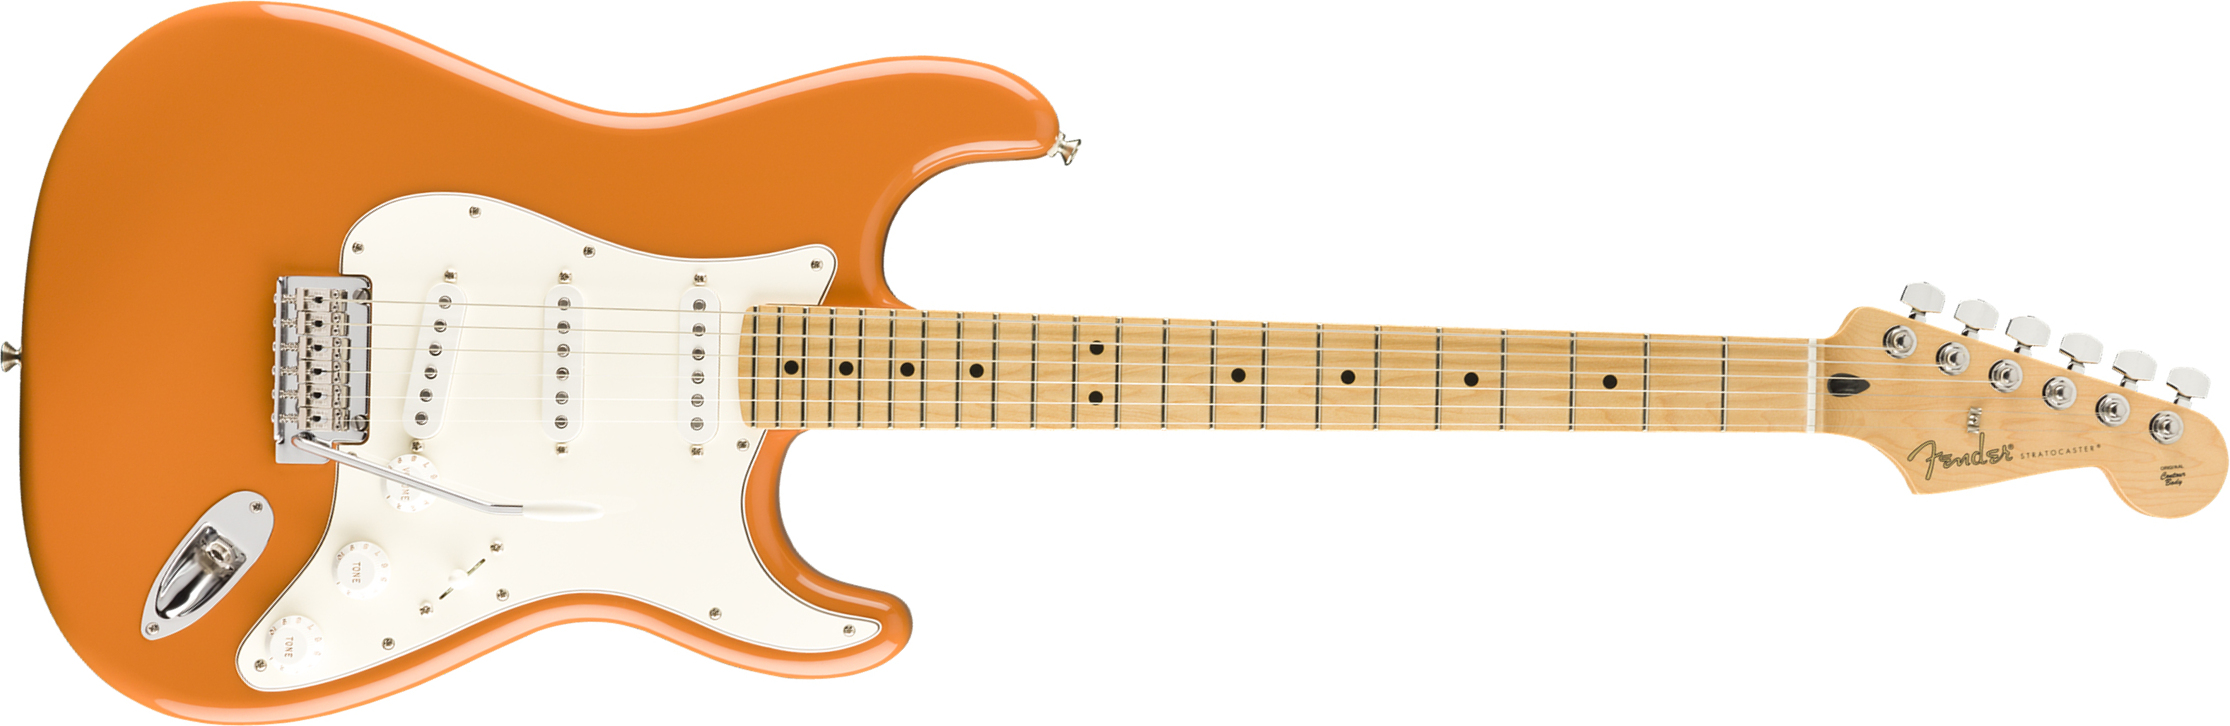 Fender Strat Player Mex Sss Mn - Capri Orange - E-Gitarre in Str-Form - Main picture